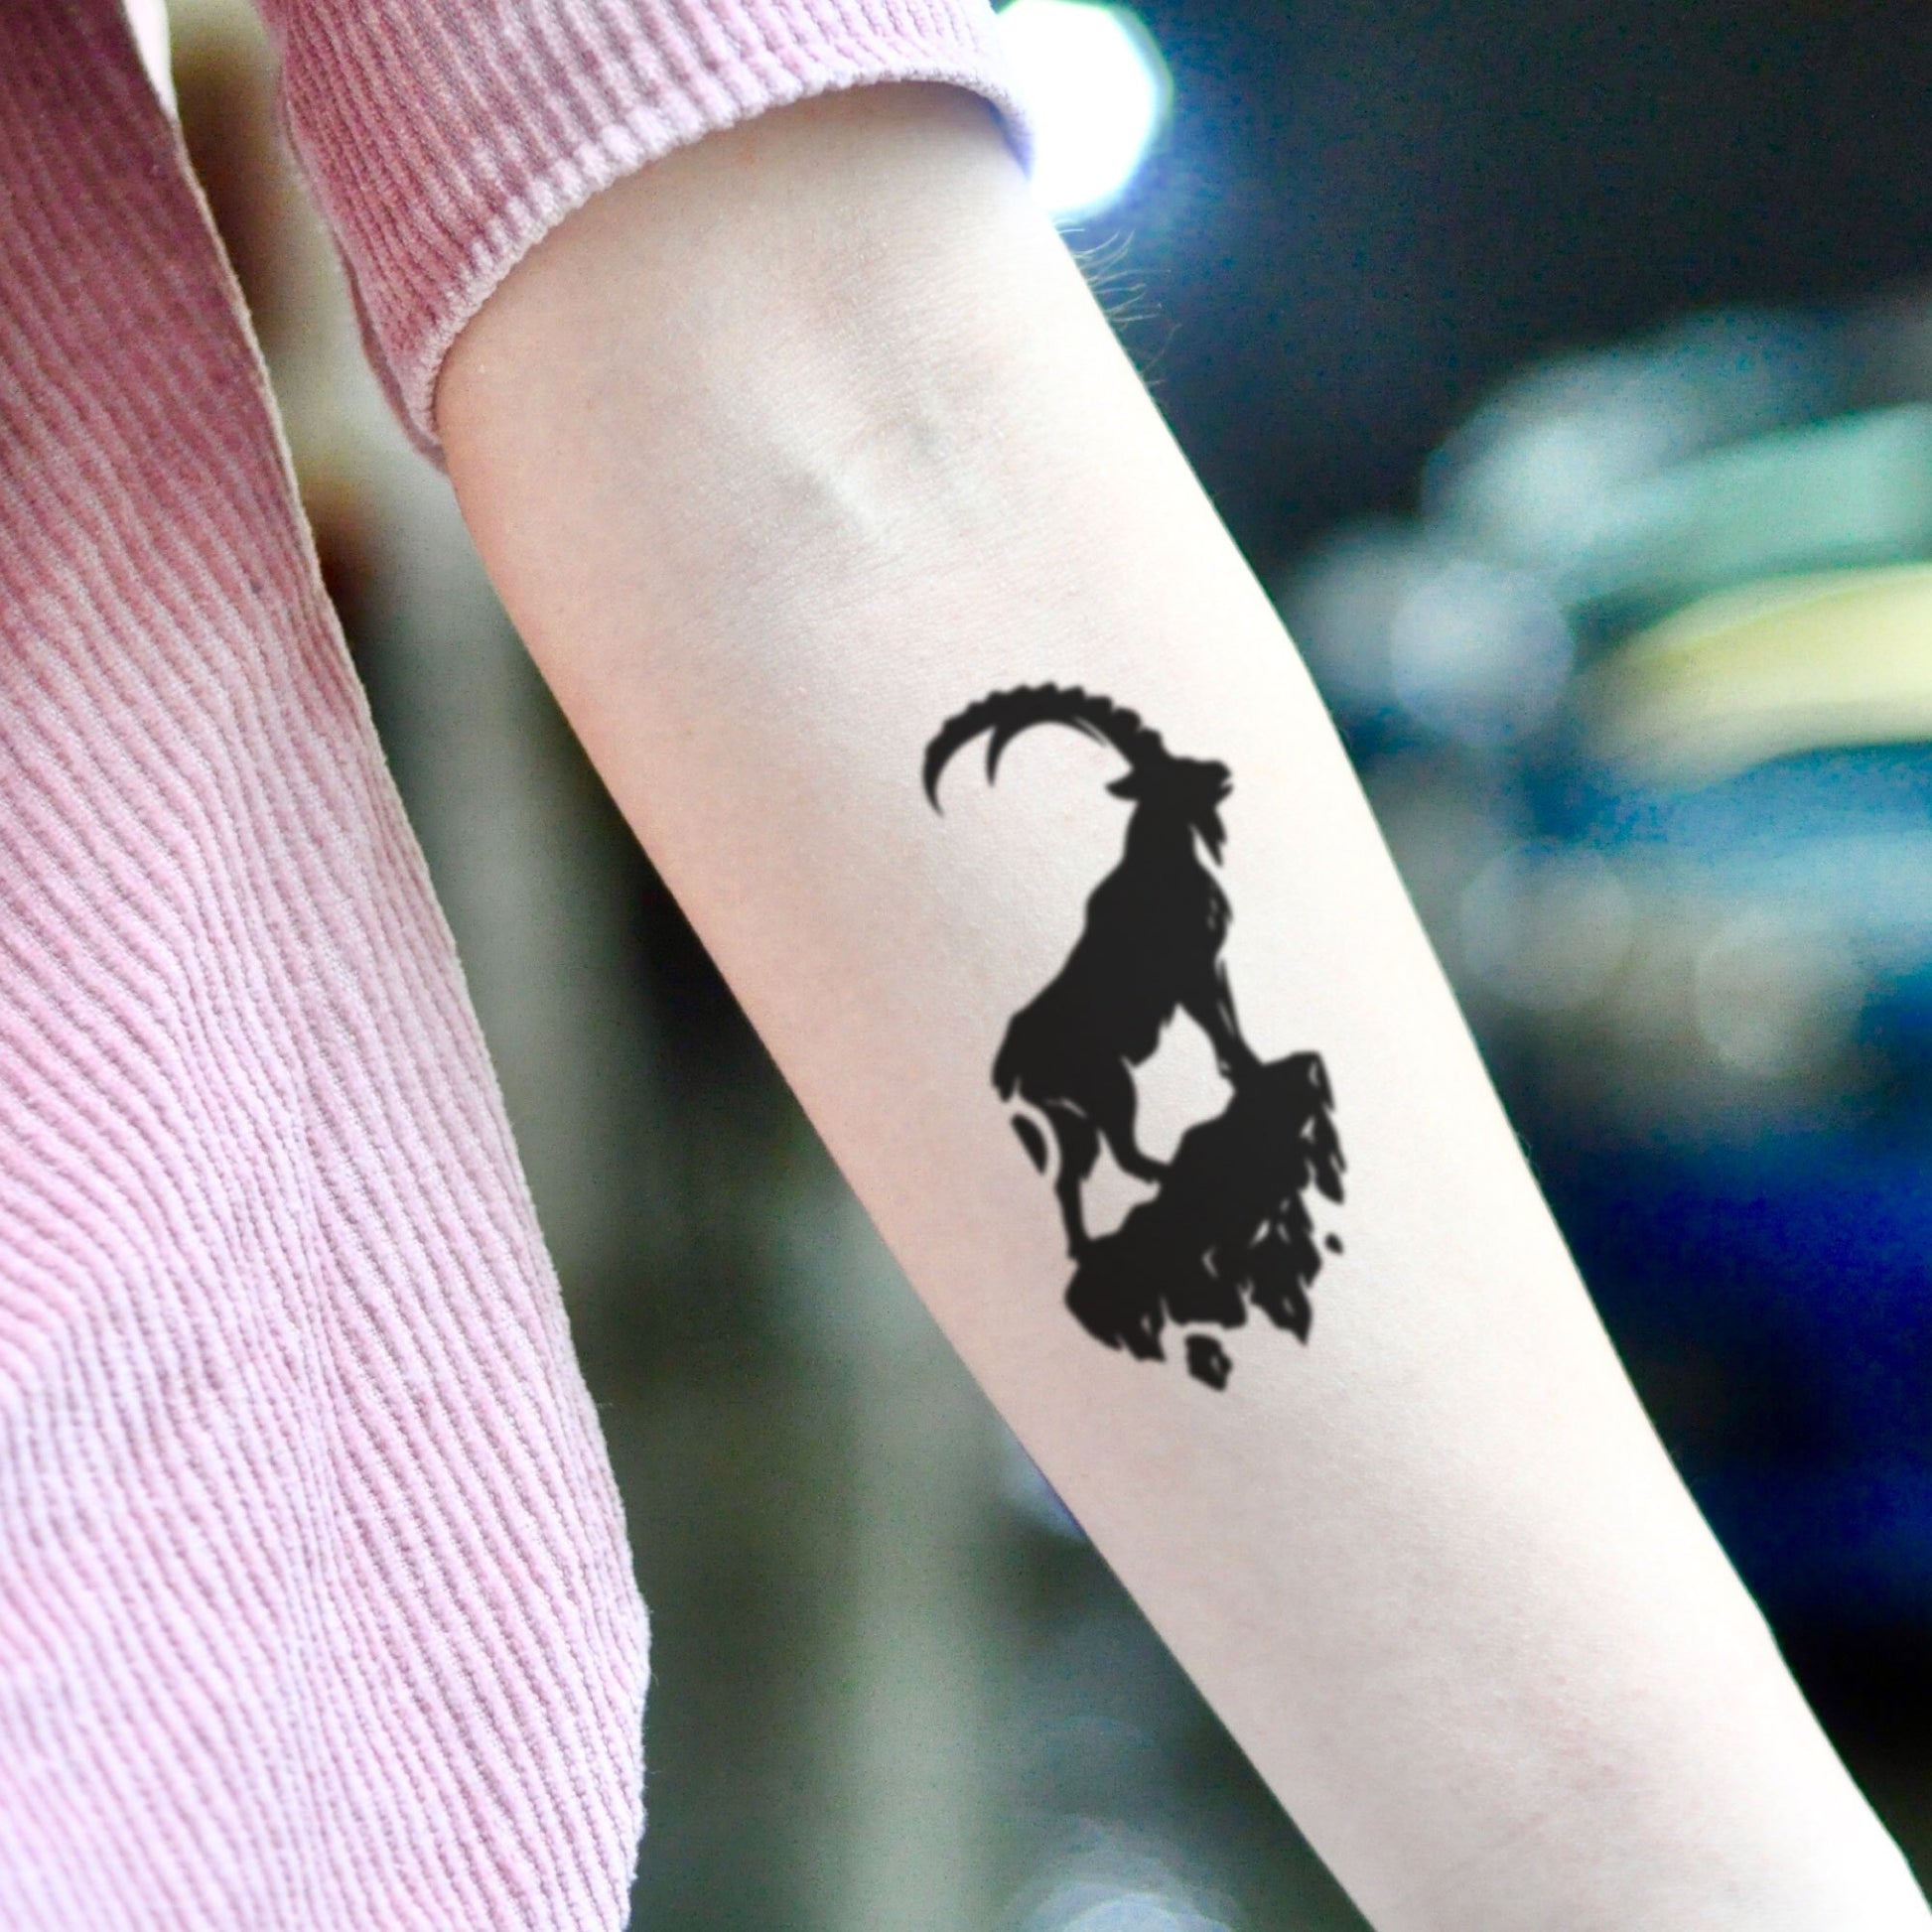 fake small mountain goat scapegoat animal temporary tattoo sticker design idea on inner arm